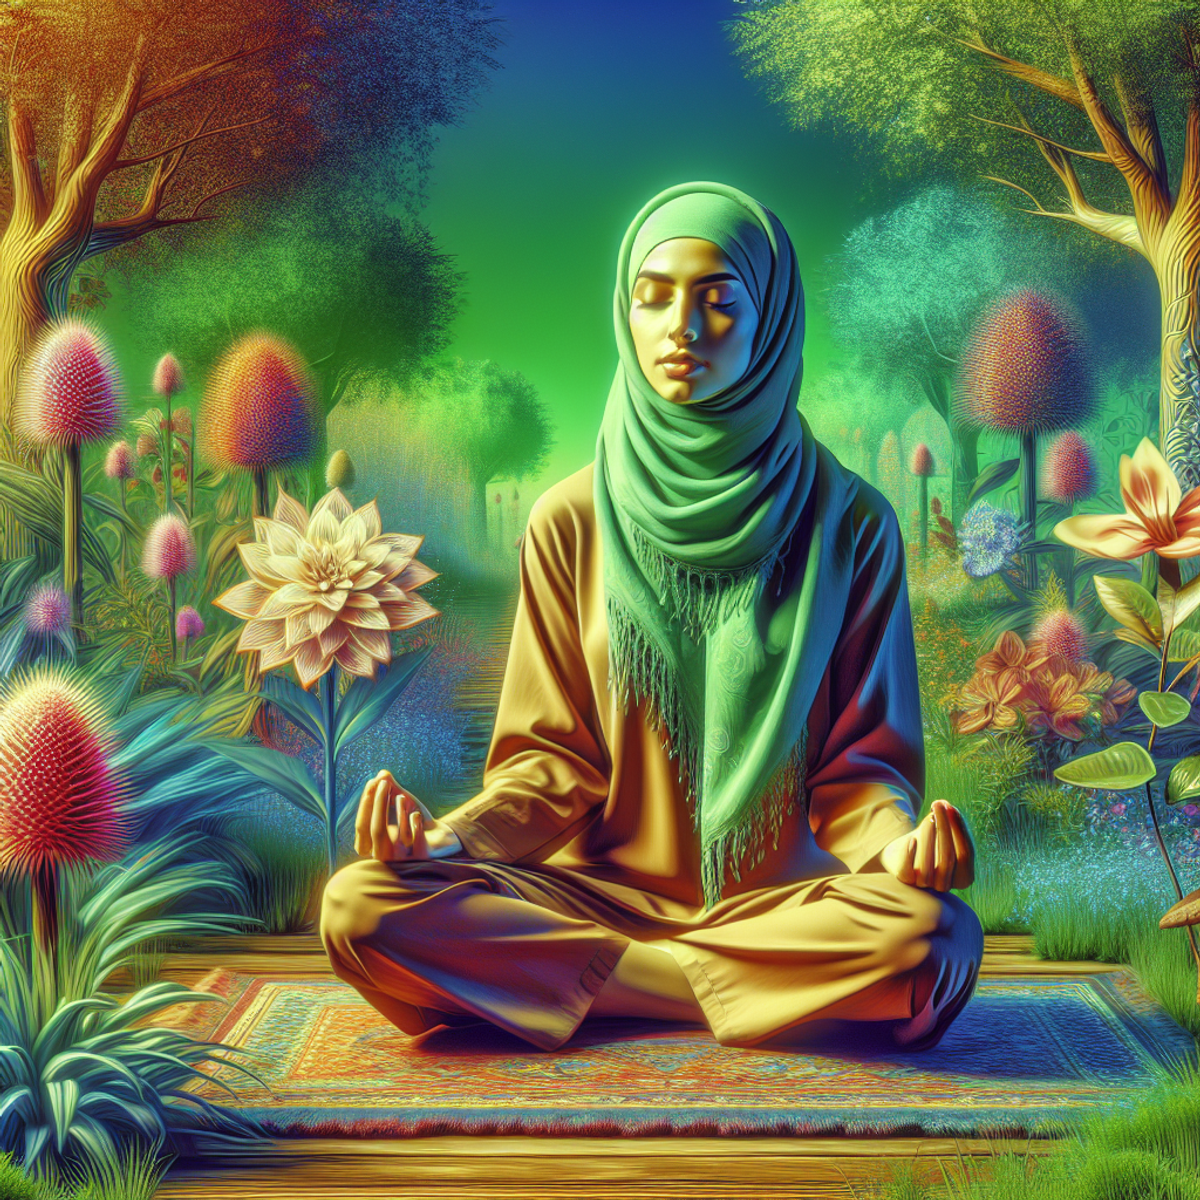 A woman meditating in a lush garden.